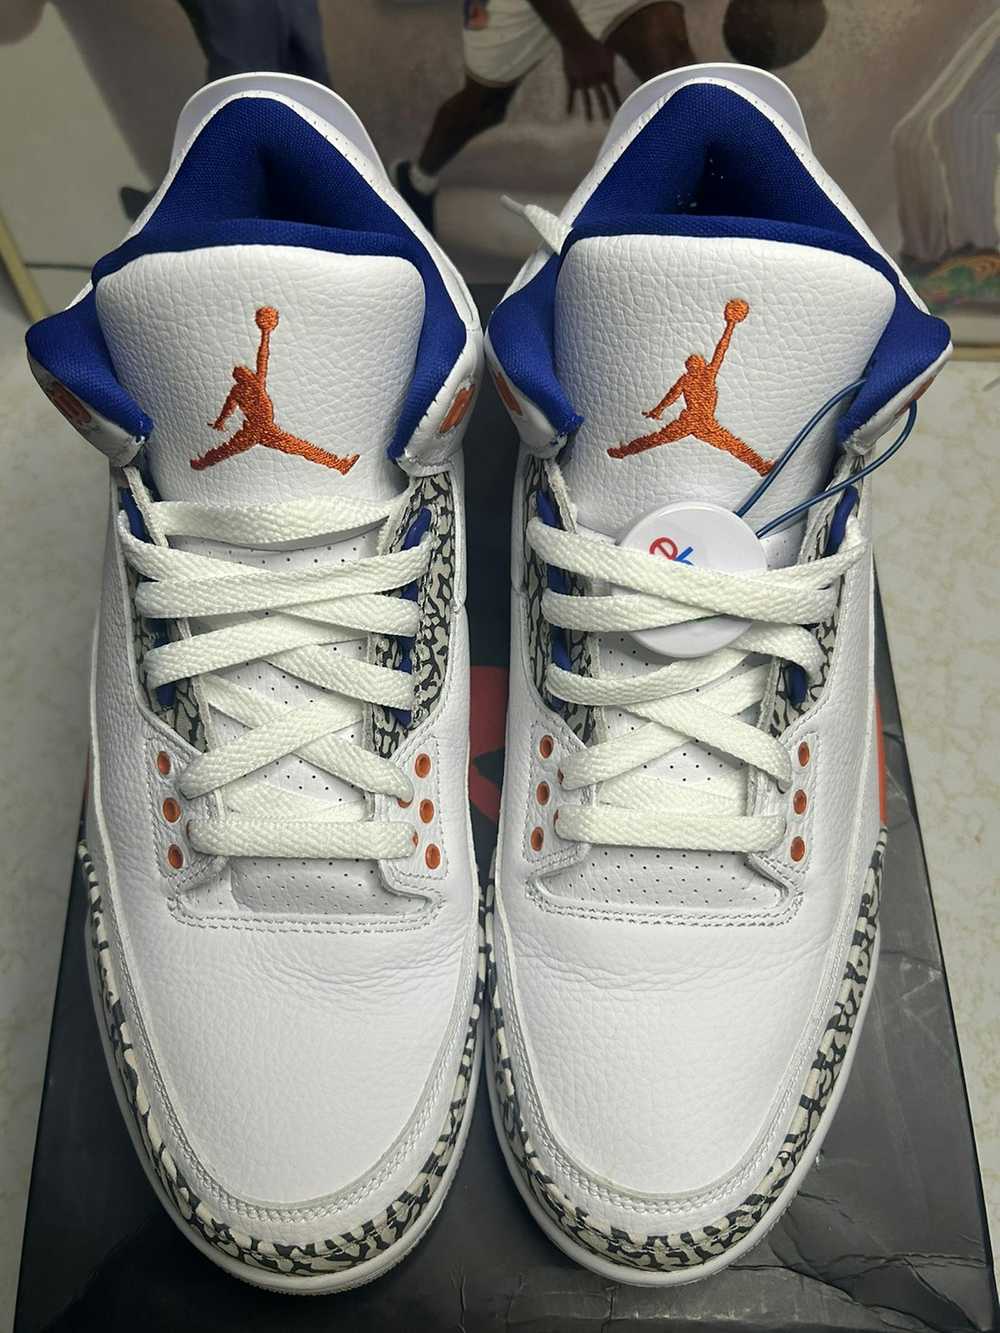 Jordan Brand Air Jordan 3 Retro Knicks - image 1